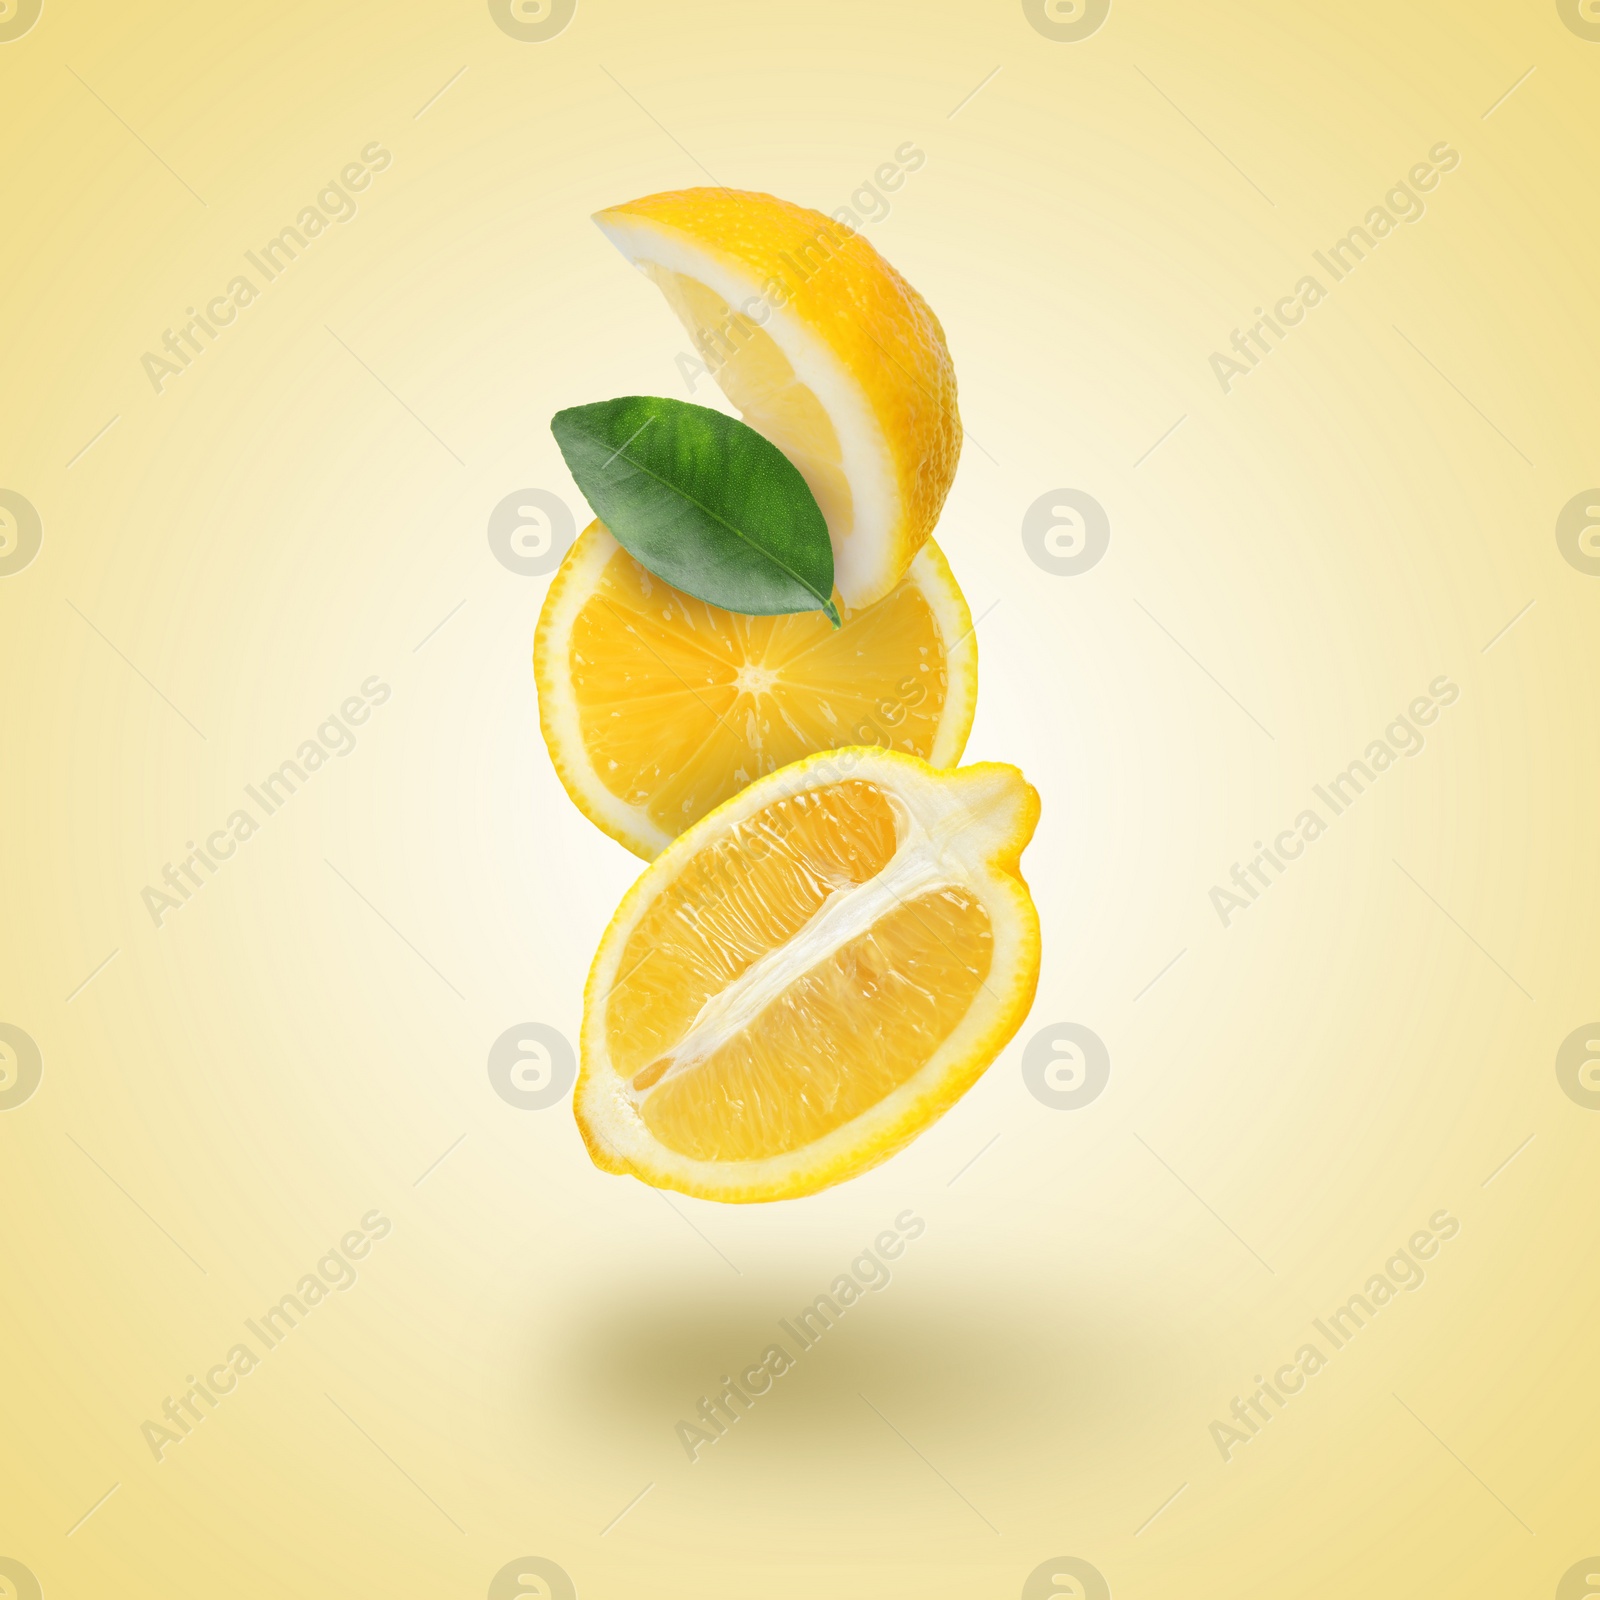 Image of Cut fresh lemons with green leaf falling on pastel gold background